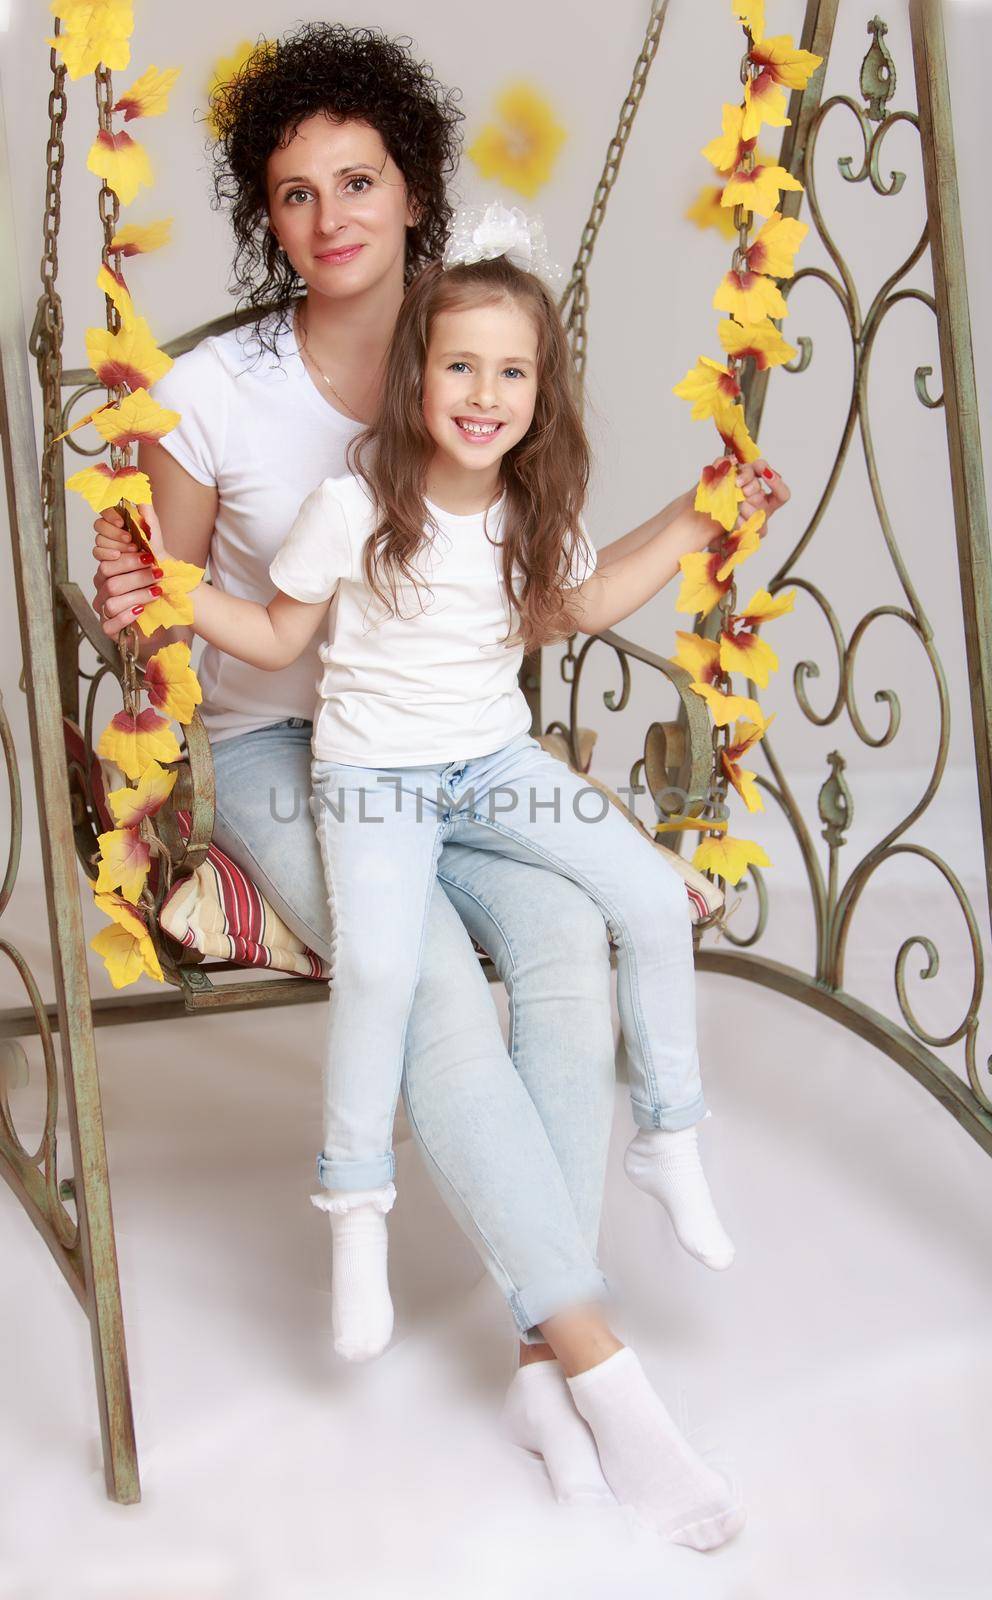 Daughter and mom swinging on the swings by kolesnikov_studio